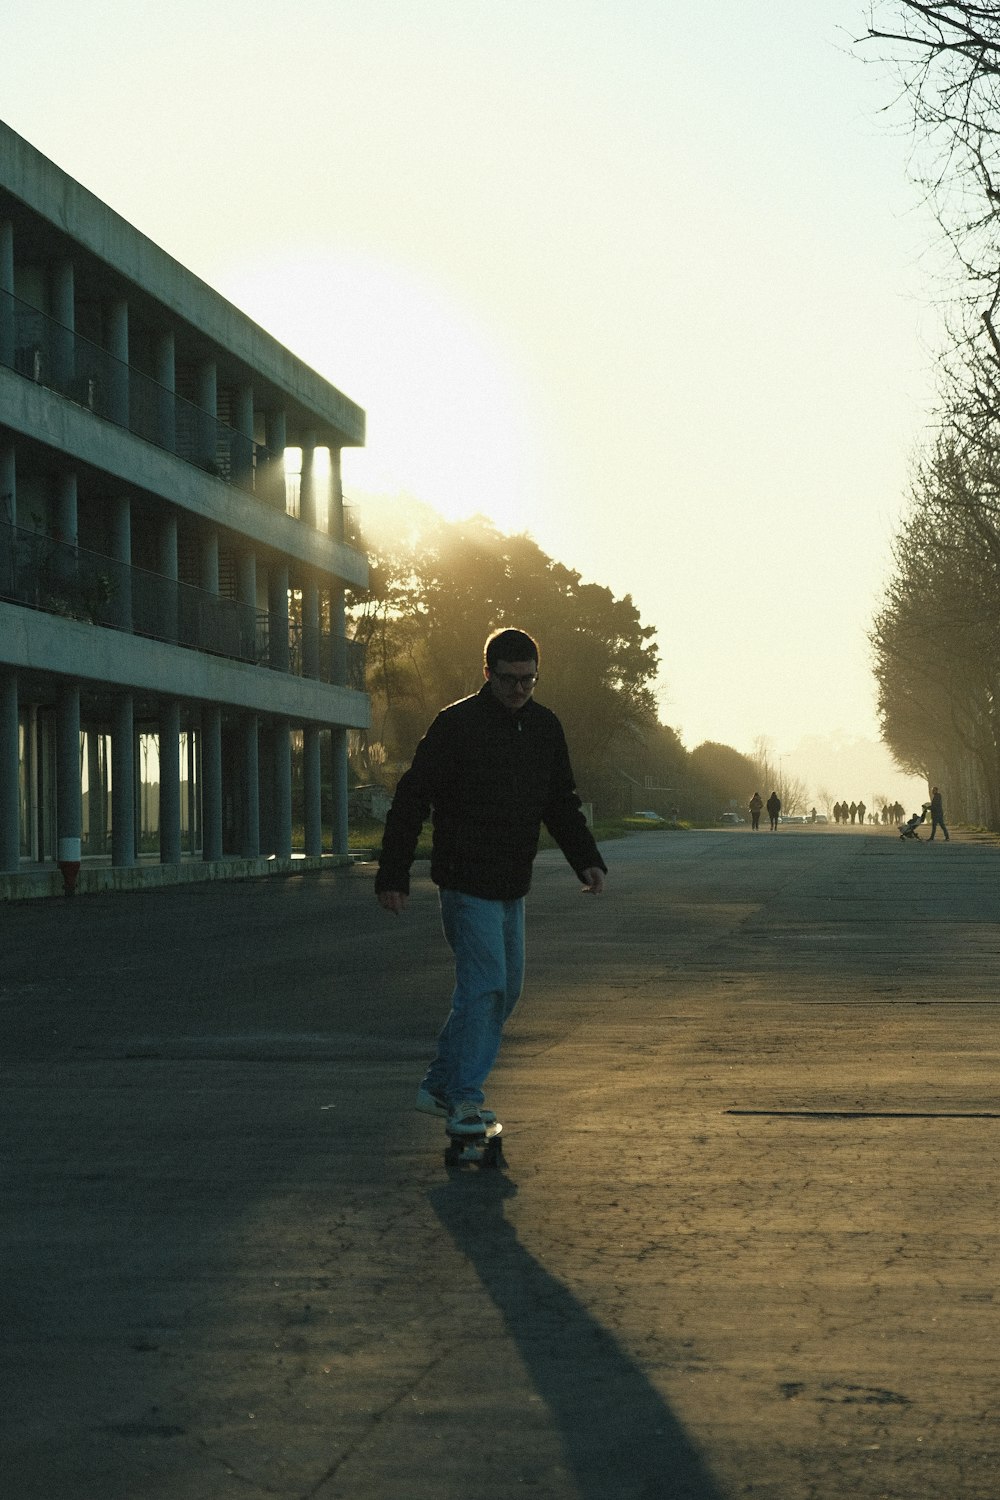 a man riding a skateboard down a street